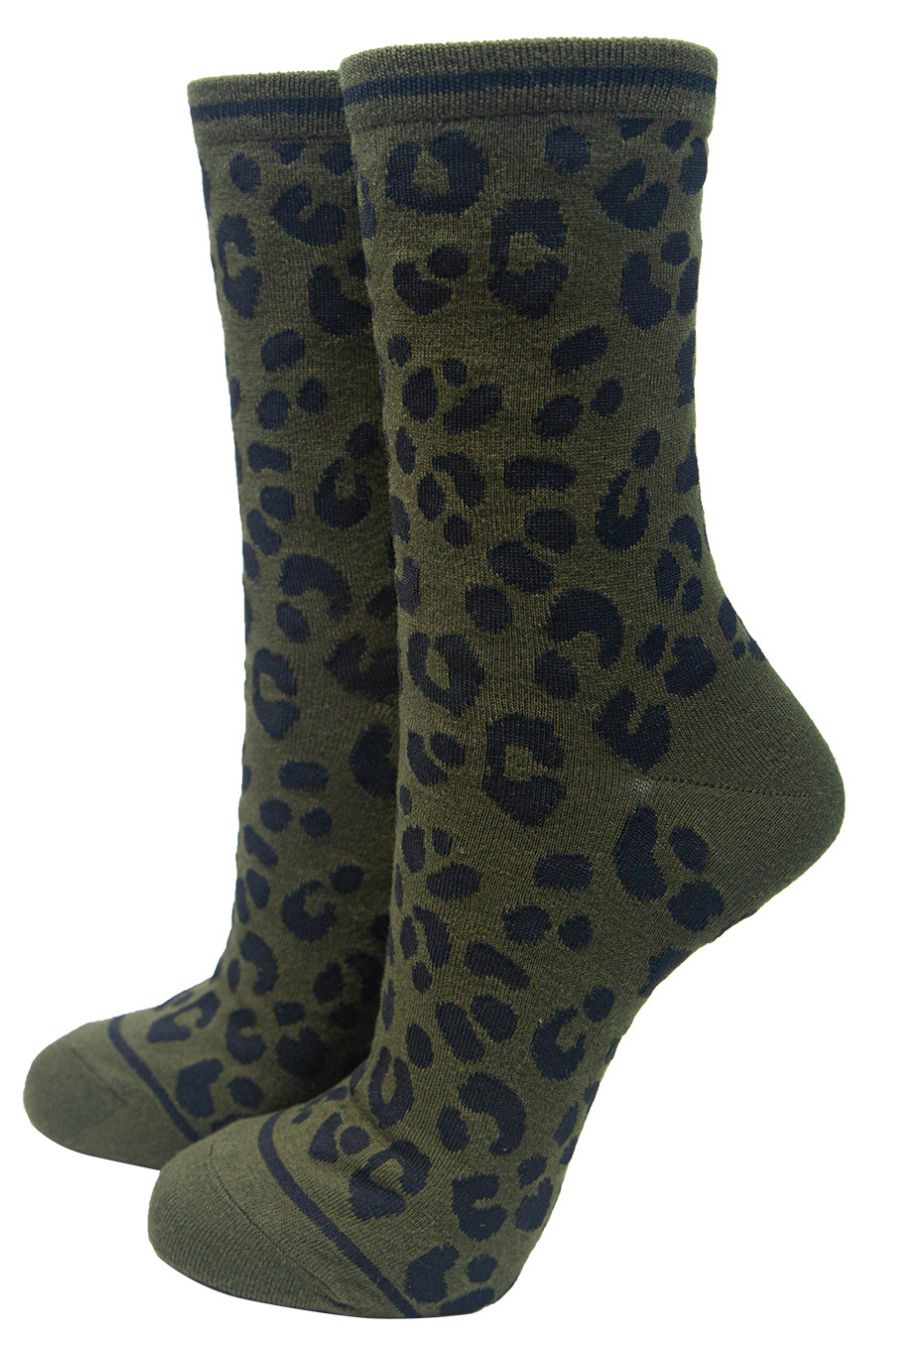 green and black cheetah print bamboo ankle socks 